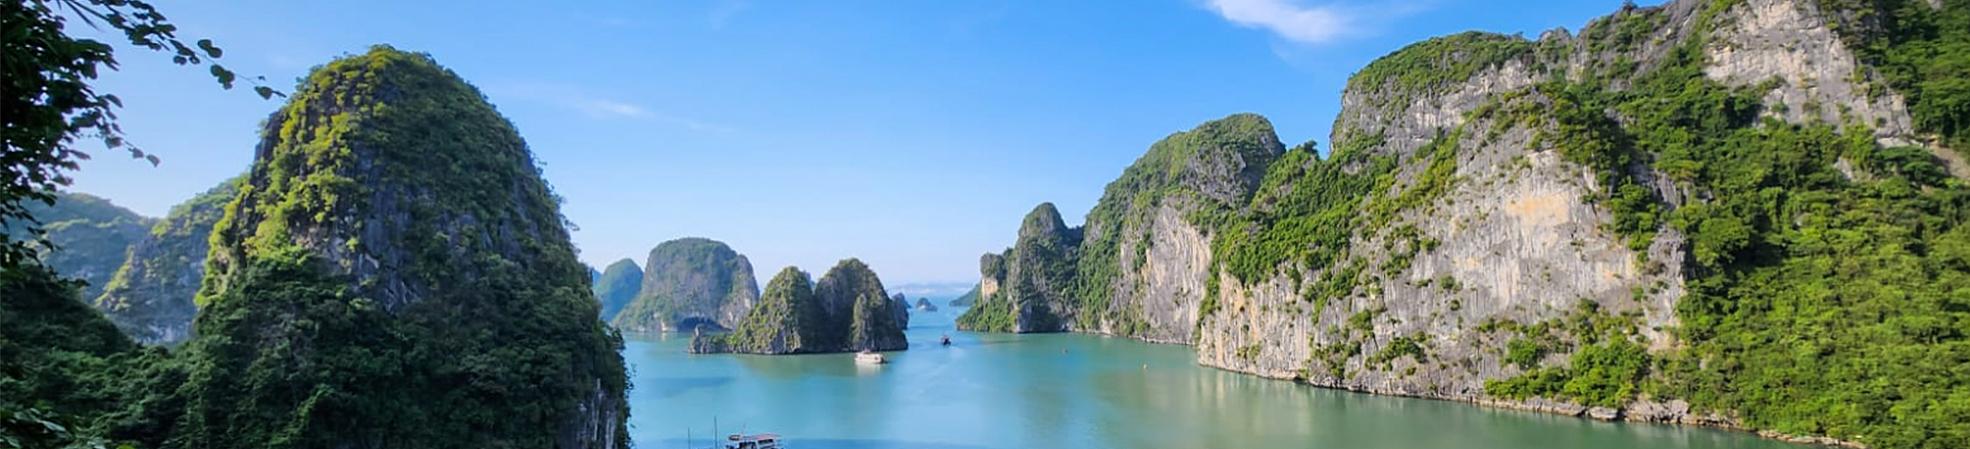 Top 10 Natural Wonders You Must Visit in Vietnam